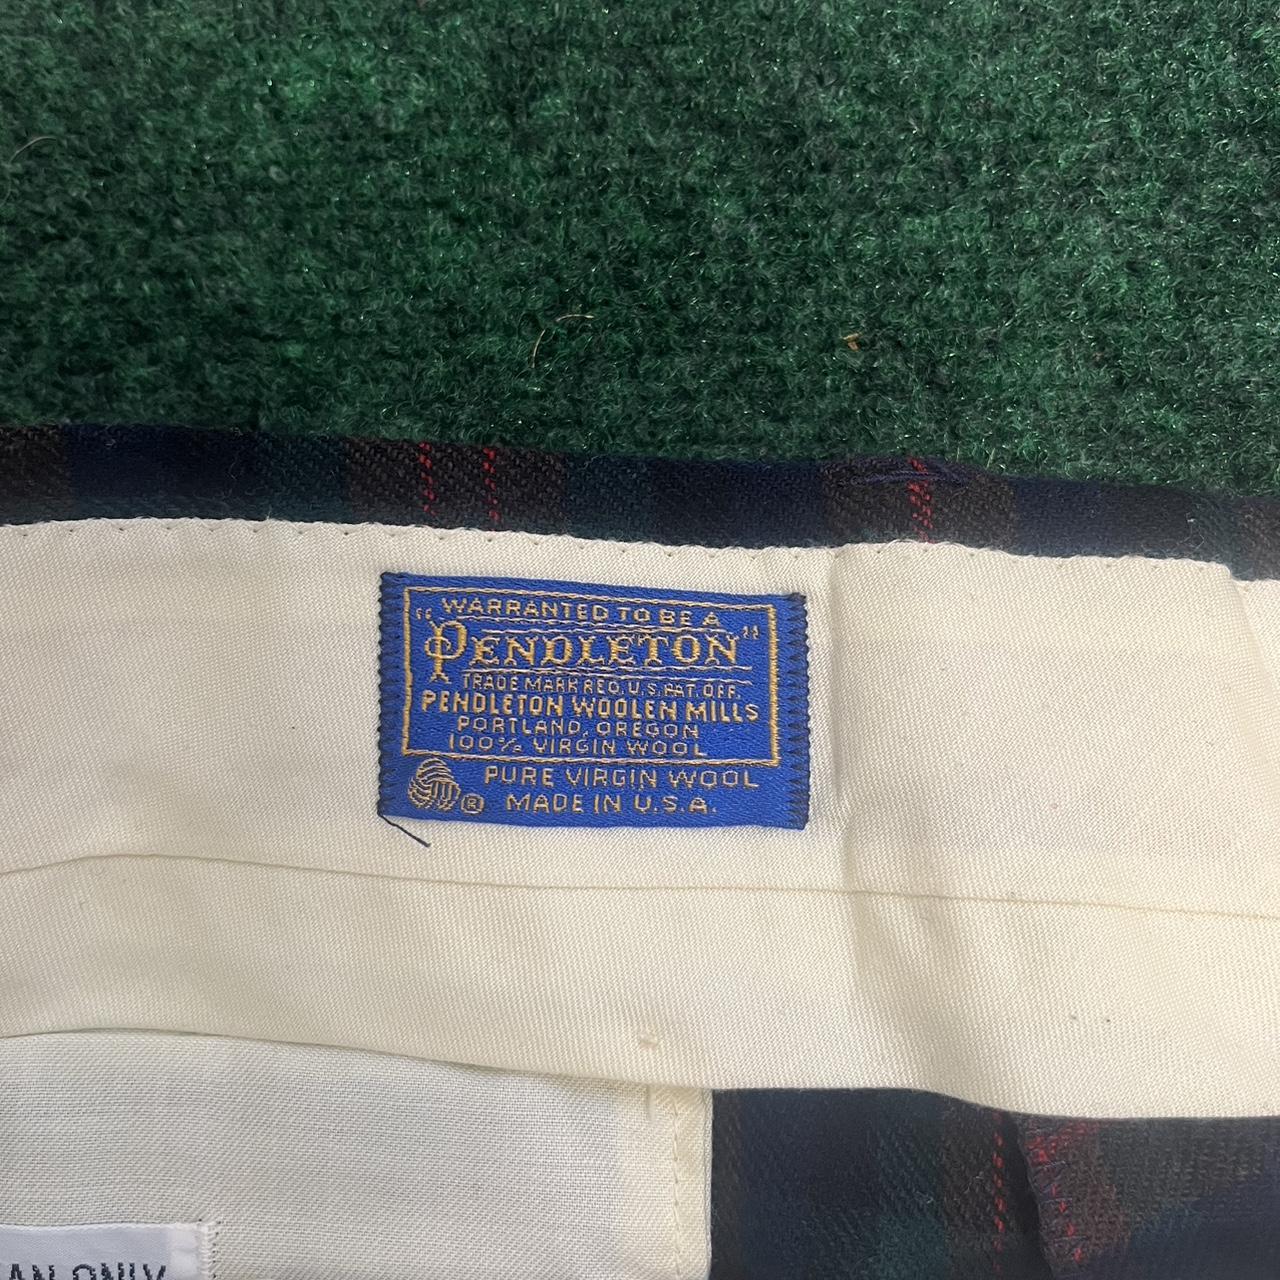 Vintage Pendelton Checkered Plaid Pants. Made in... - Depop